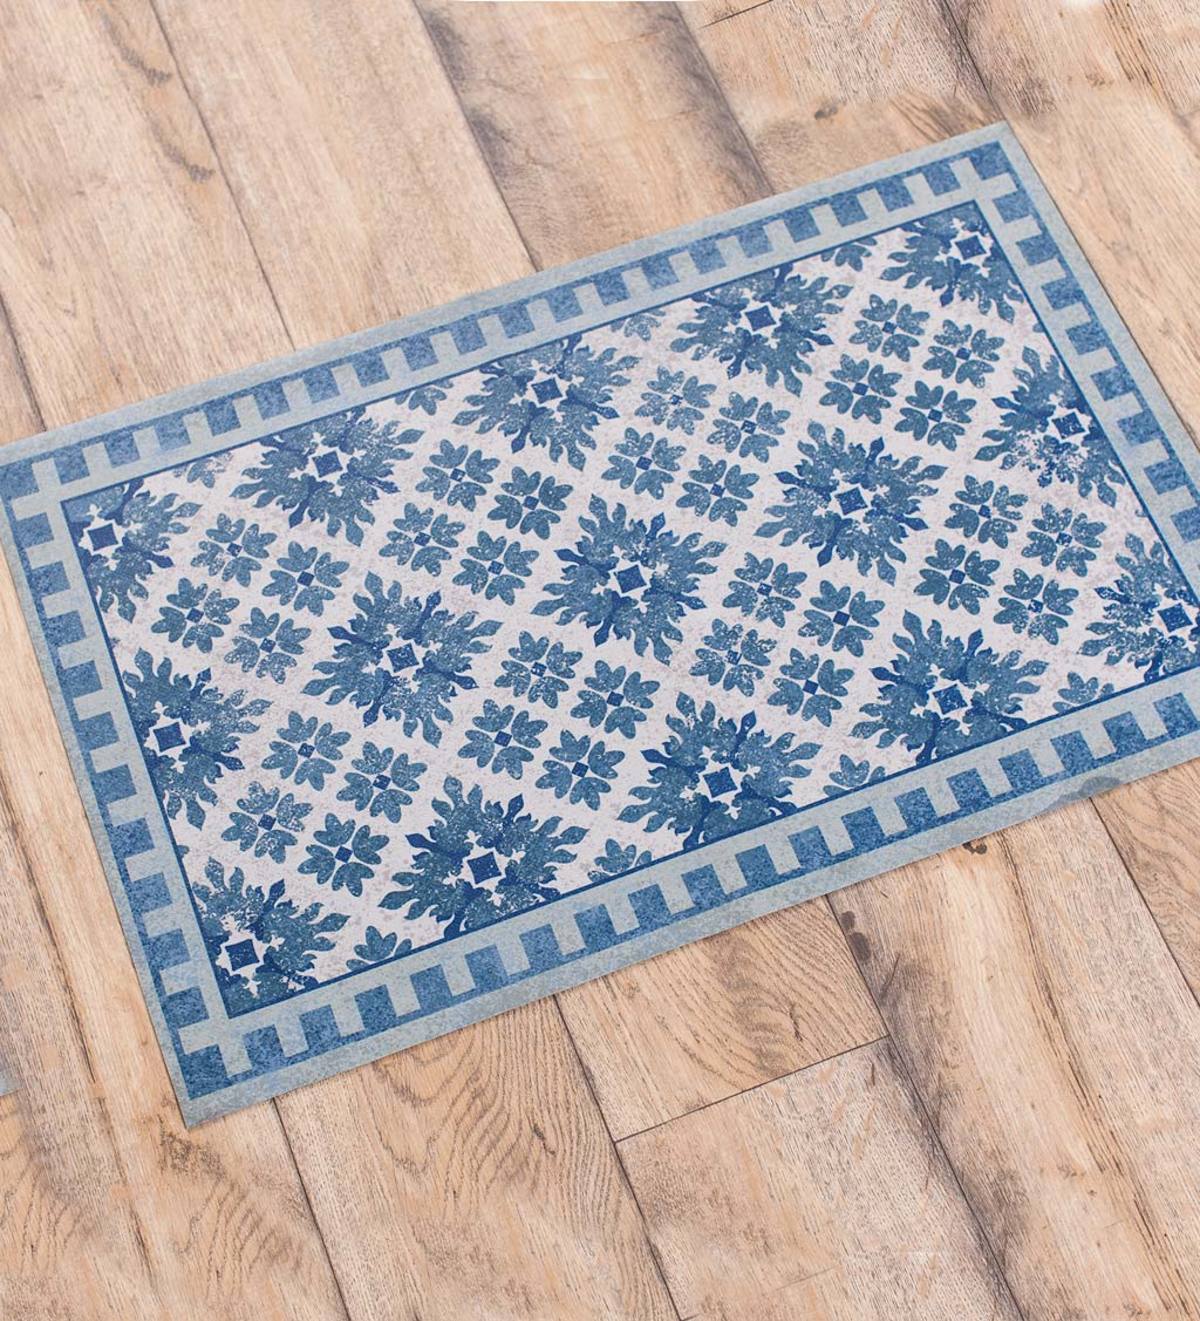 Cleo Waterproof Non-Skid decorative Floor Cloth Mat